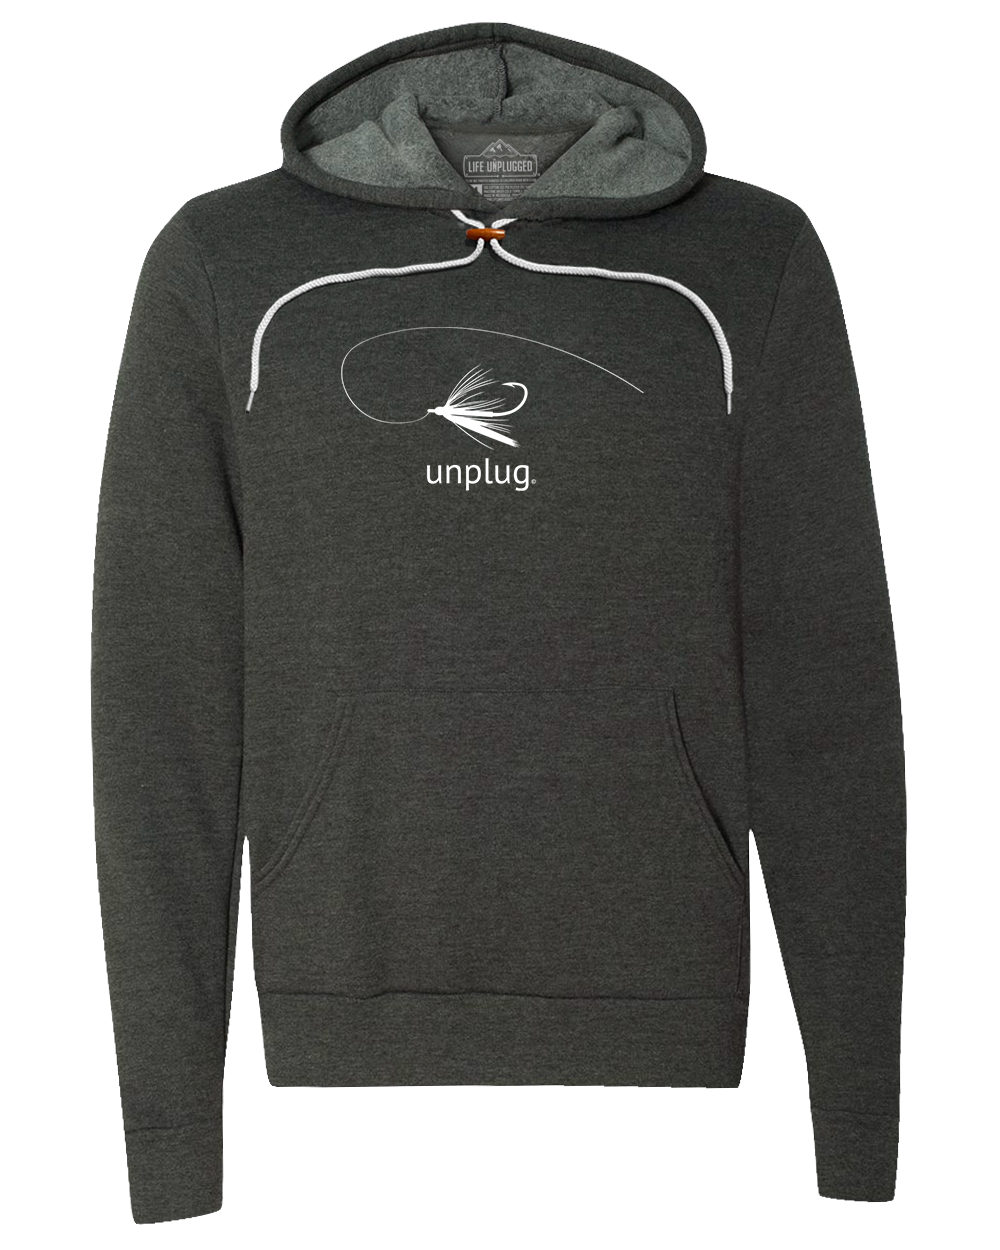 Fly Fishing Premium Super Soft Hooded Sweatshirt